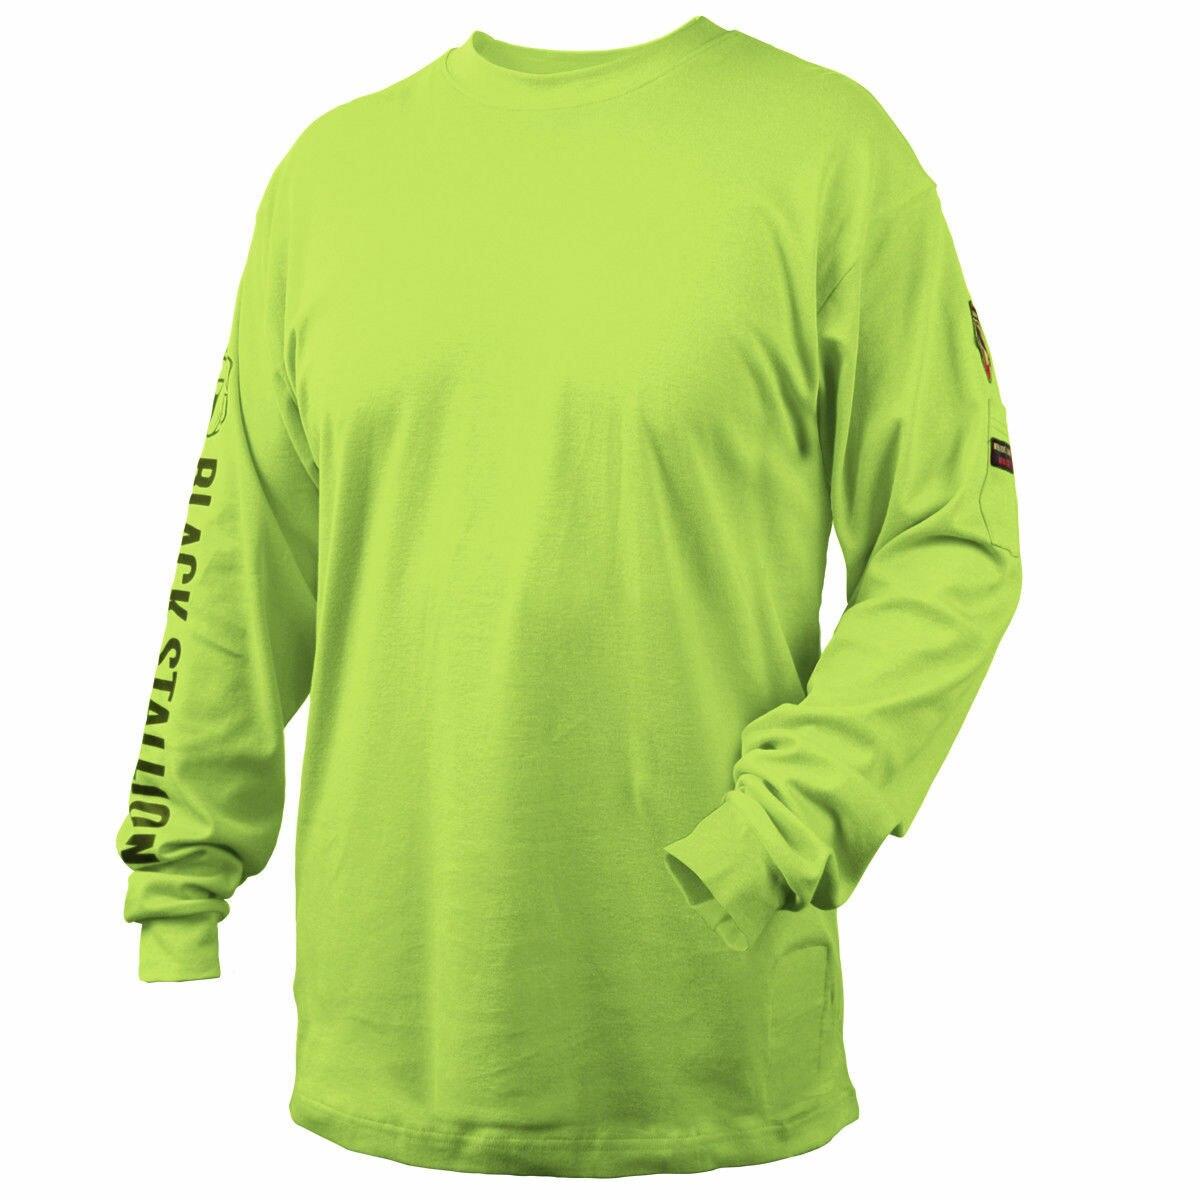 Revco Black Stallion Lime 7 oz. FR Cotton Knit Long-Sleeve T-Shirt